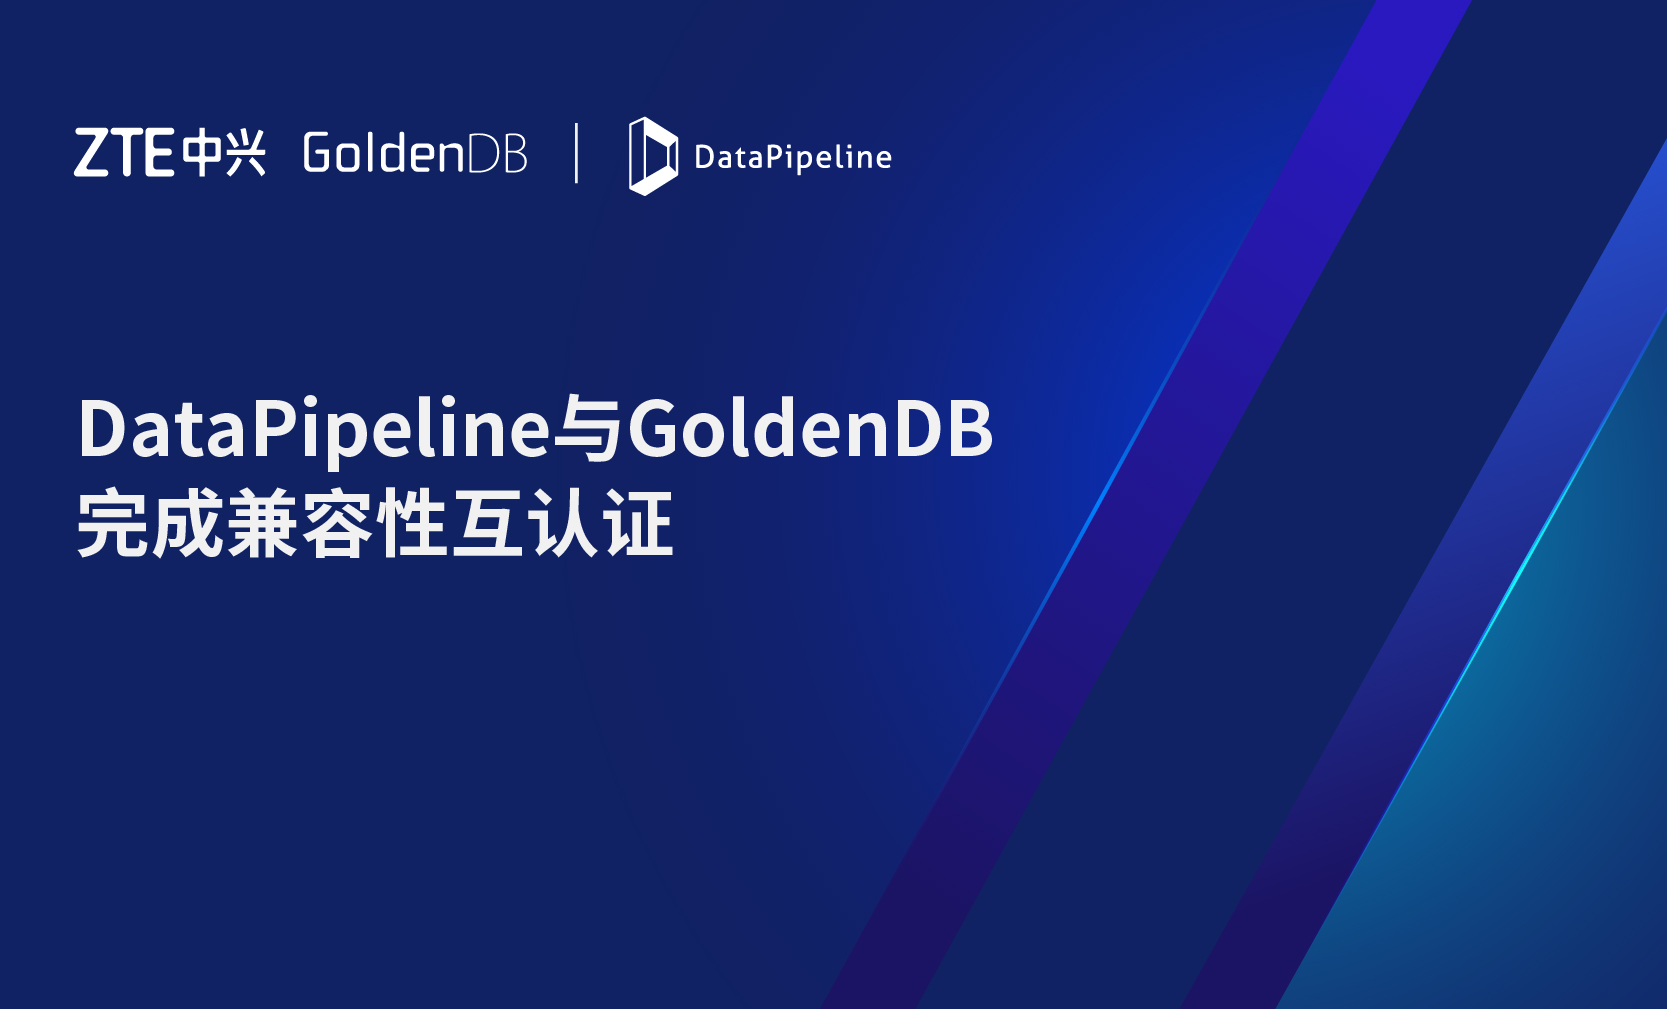 DataPipeline与GoldenDB完成兼容性互认证，加速构建安全可信金融领域数据基础设施